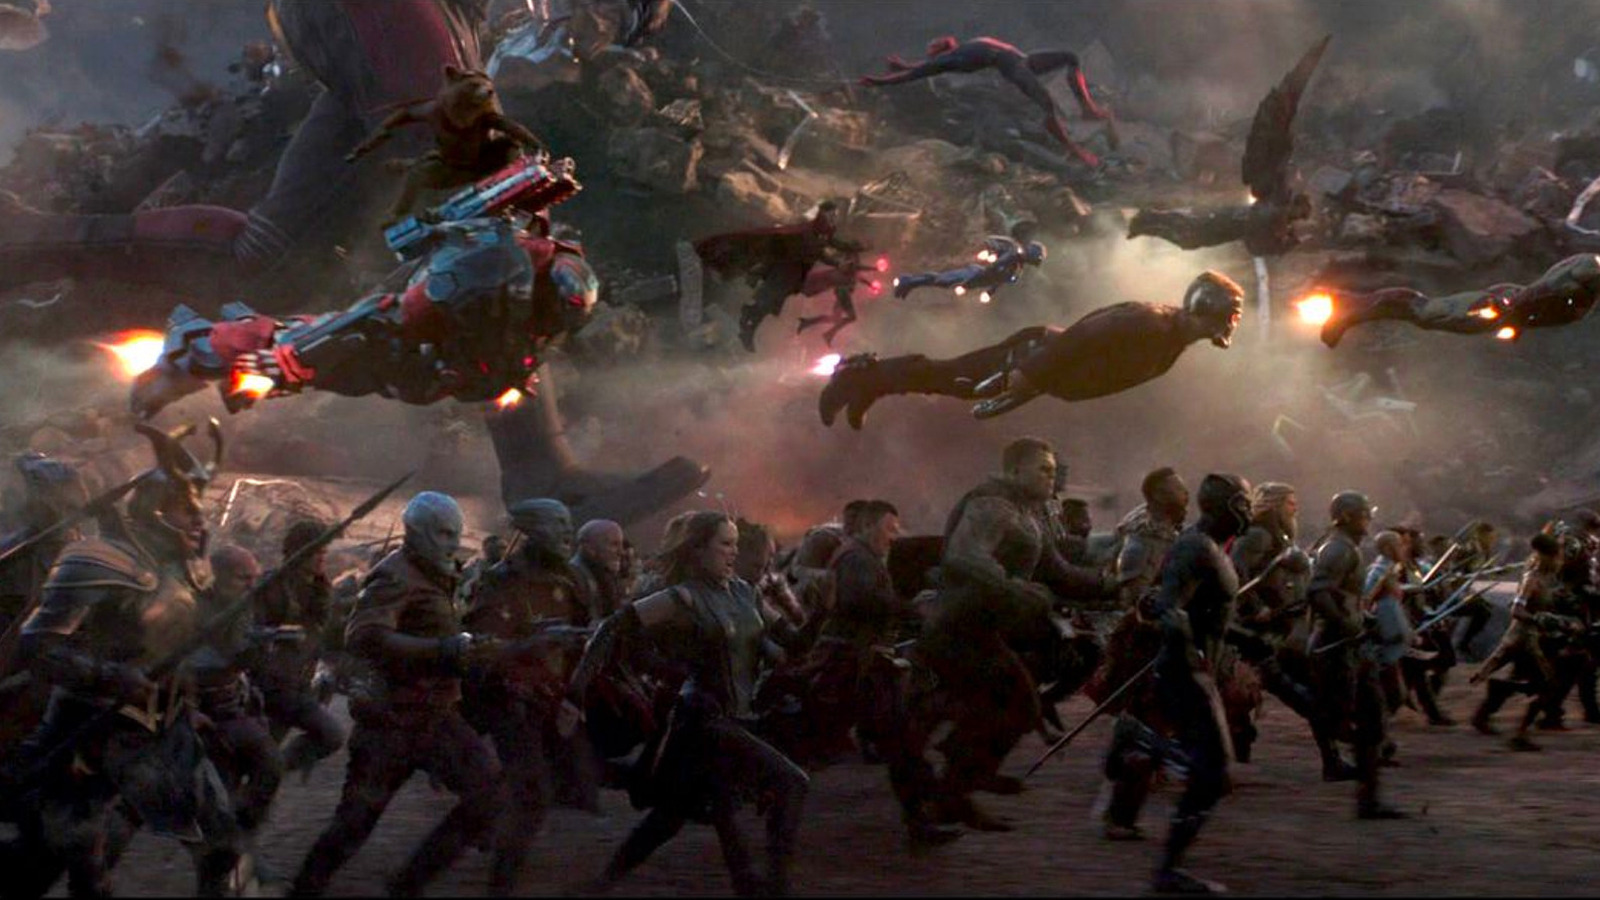 SDCC 22: Marvel Studios Announces 'Avengers: Secret Wars' and 'Avengers:  The Kang Dynasty' in 2025 - Knight Edge Media